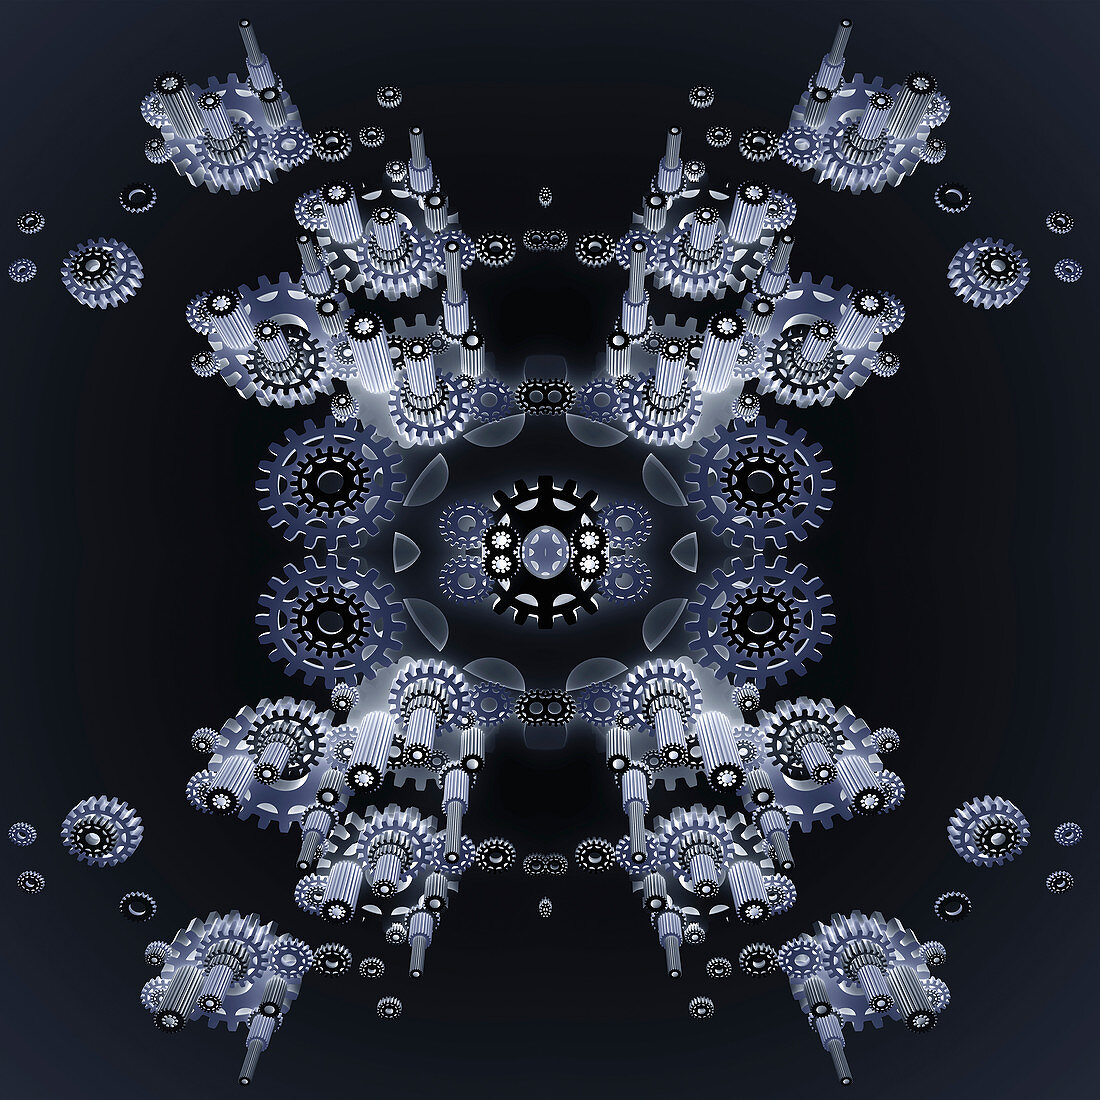 Symmetrical pattern of cogs, illustration